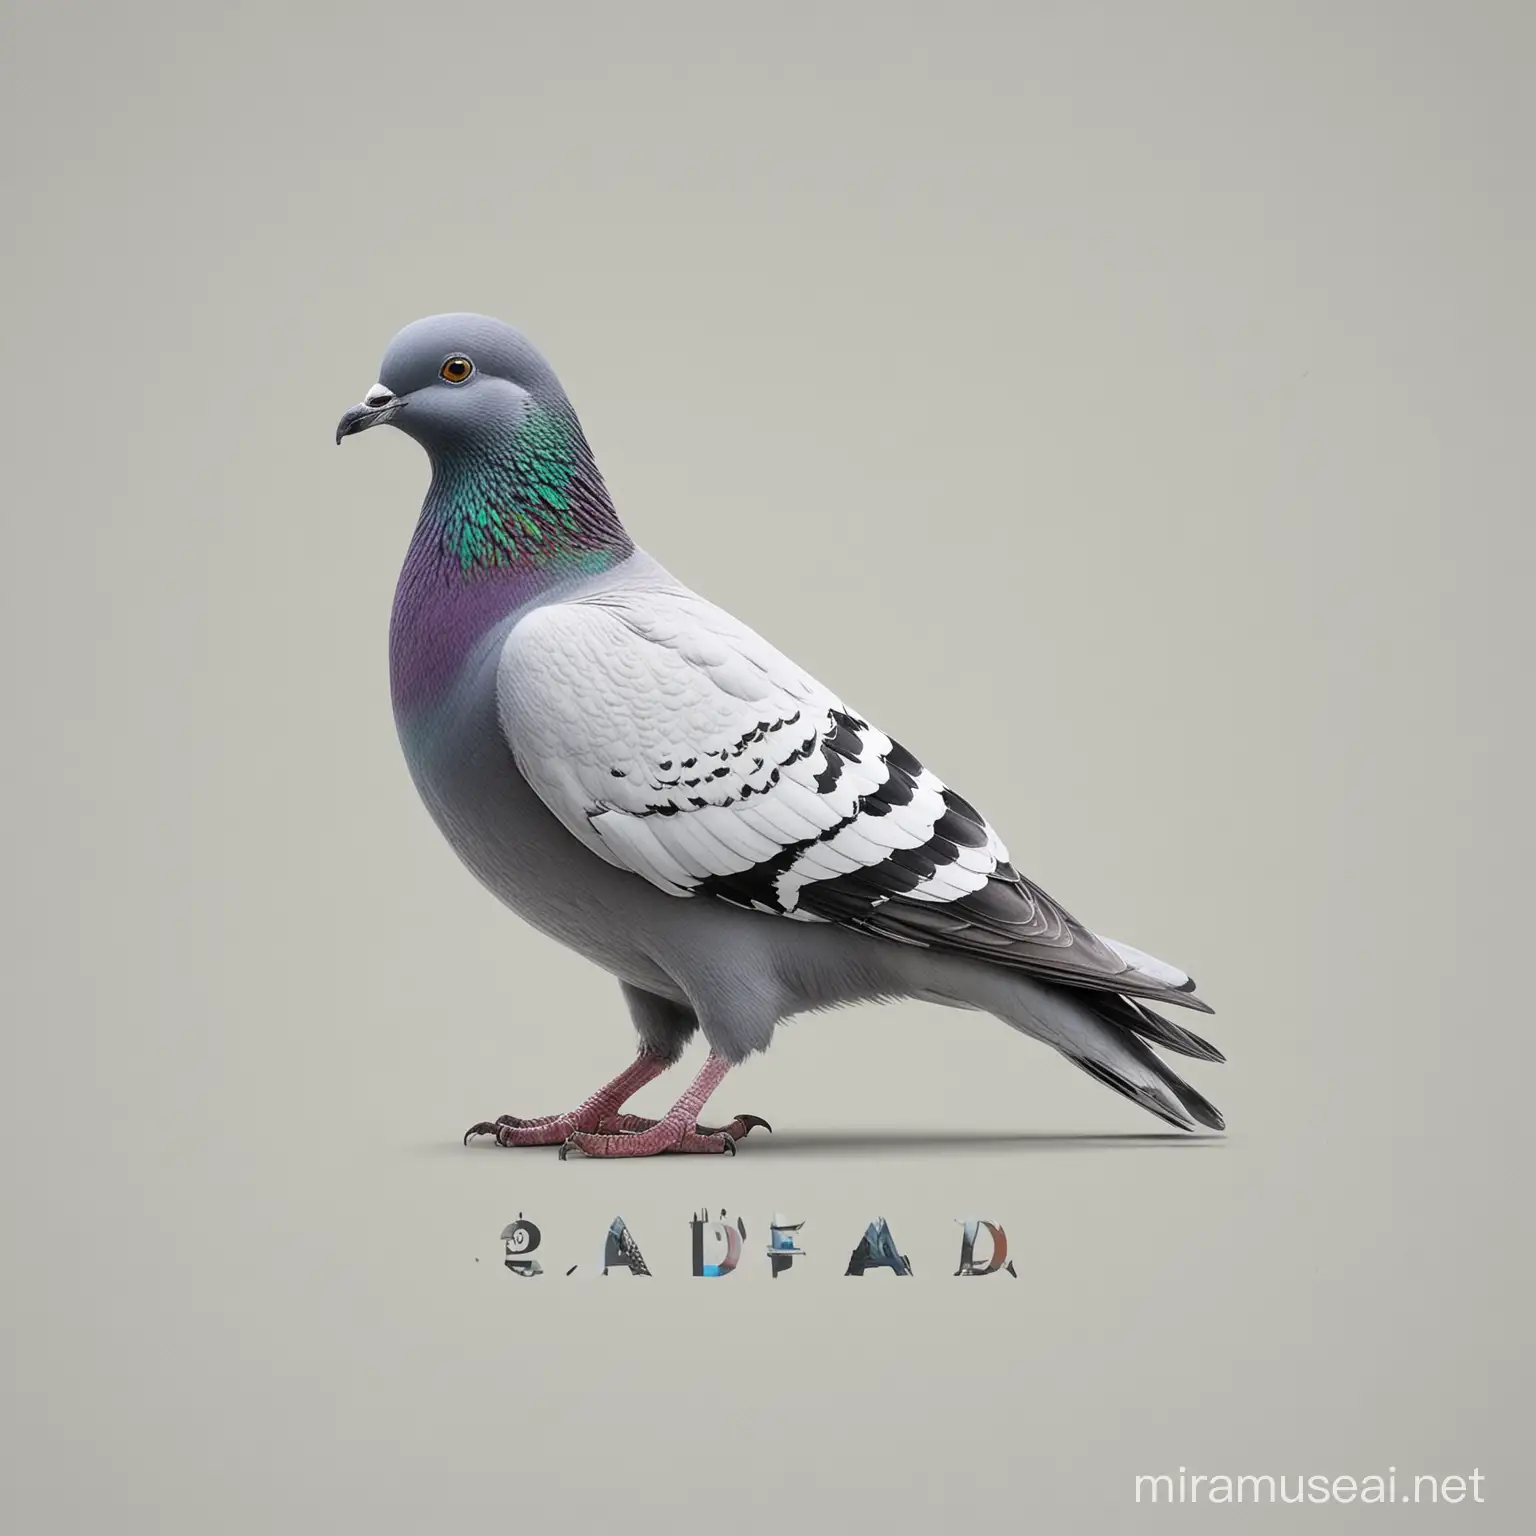 Minimalistic Pigeon Silhouette on Light Background